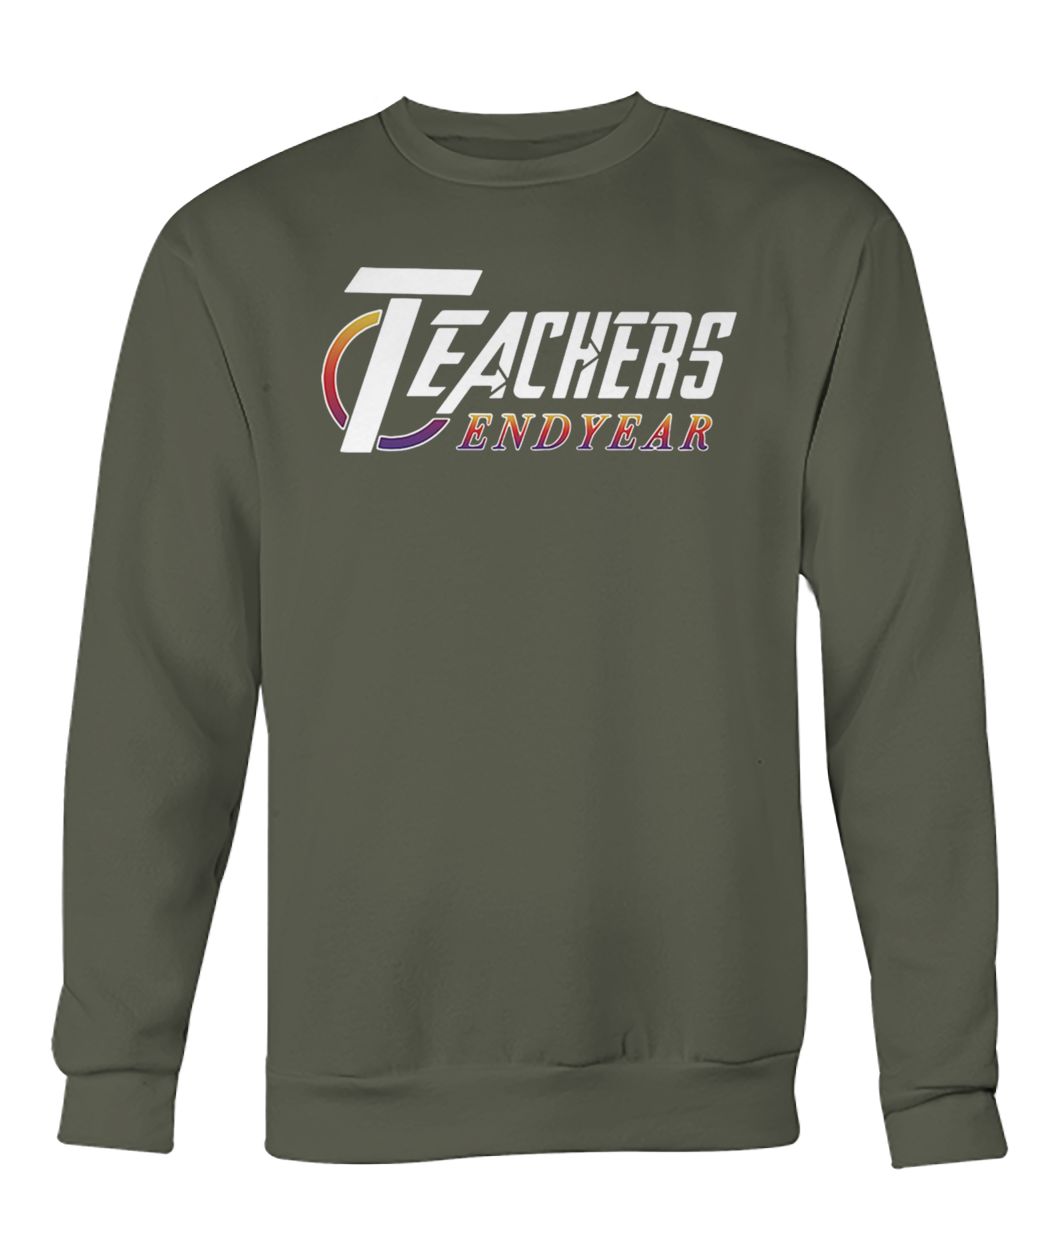 Teacher endyear avengers endgame crew neck sweatshirt